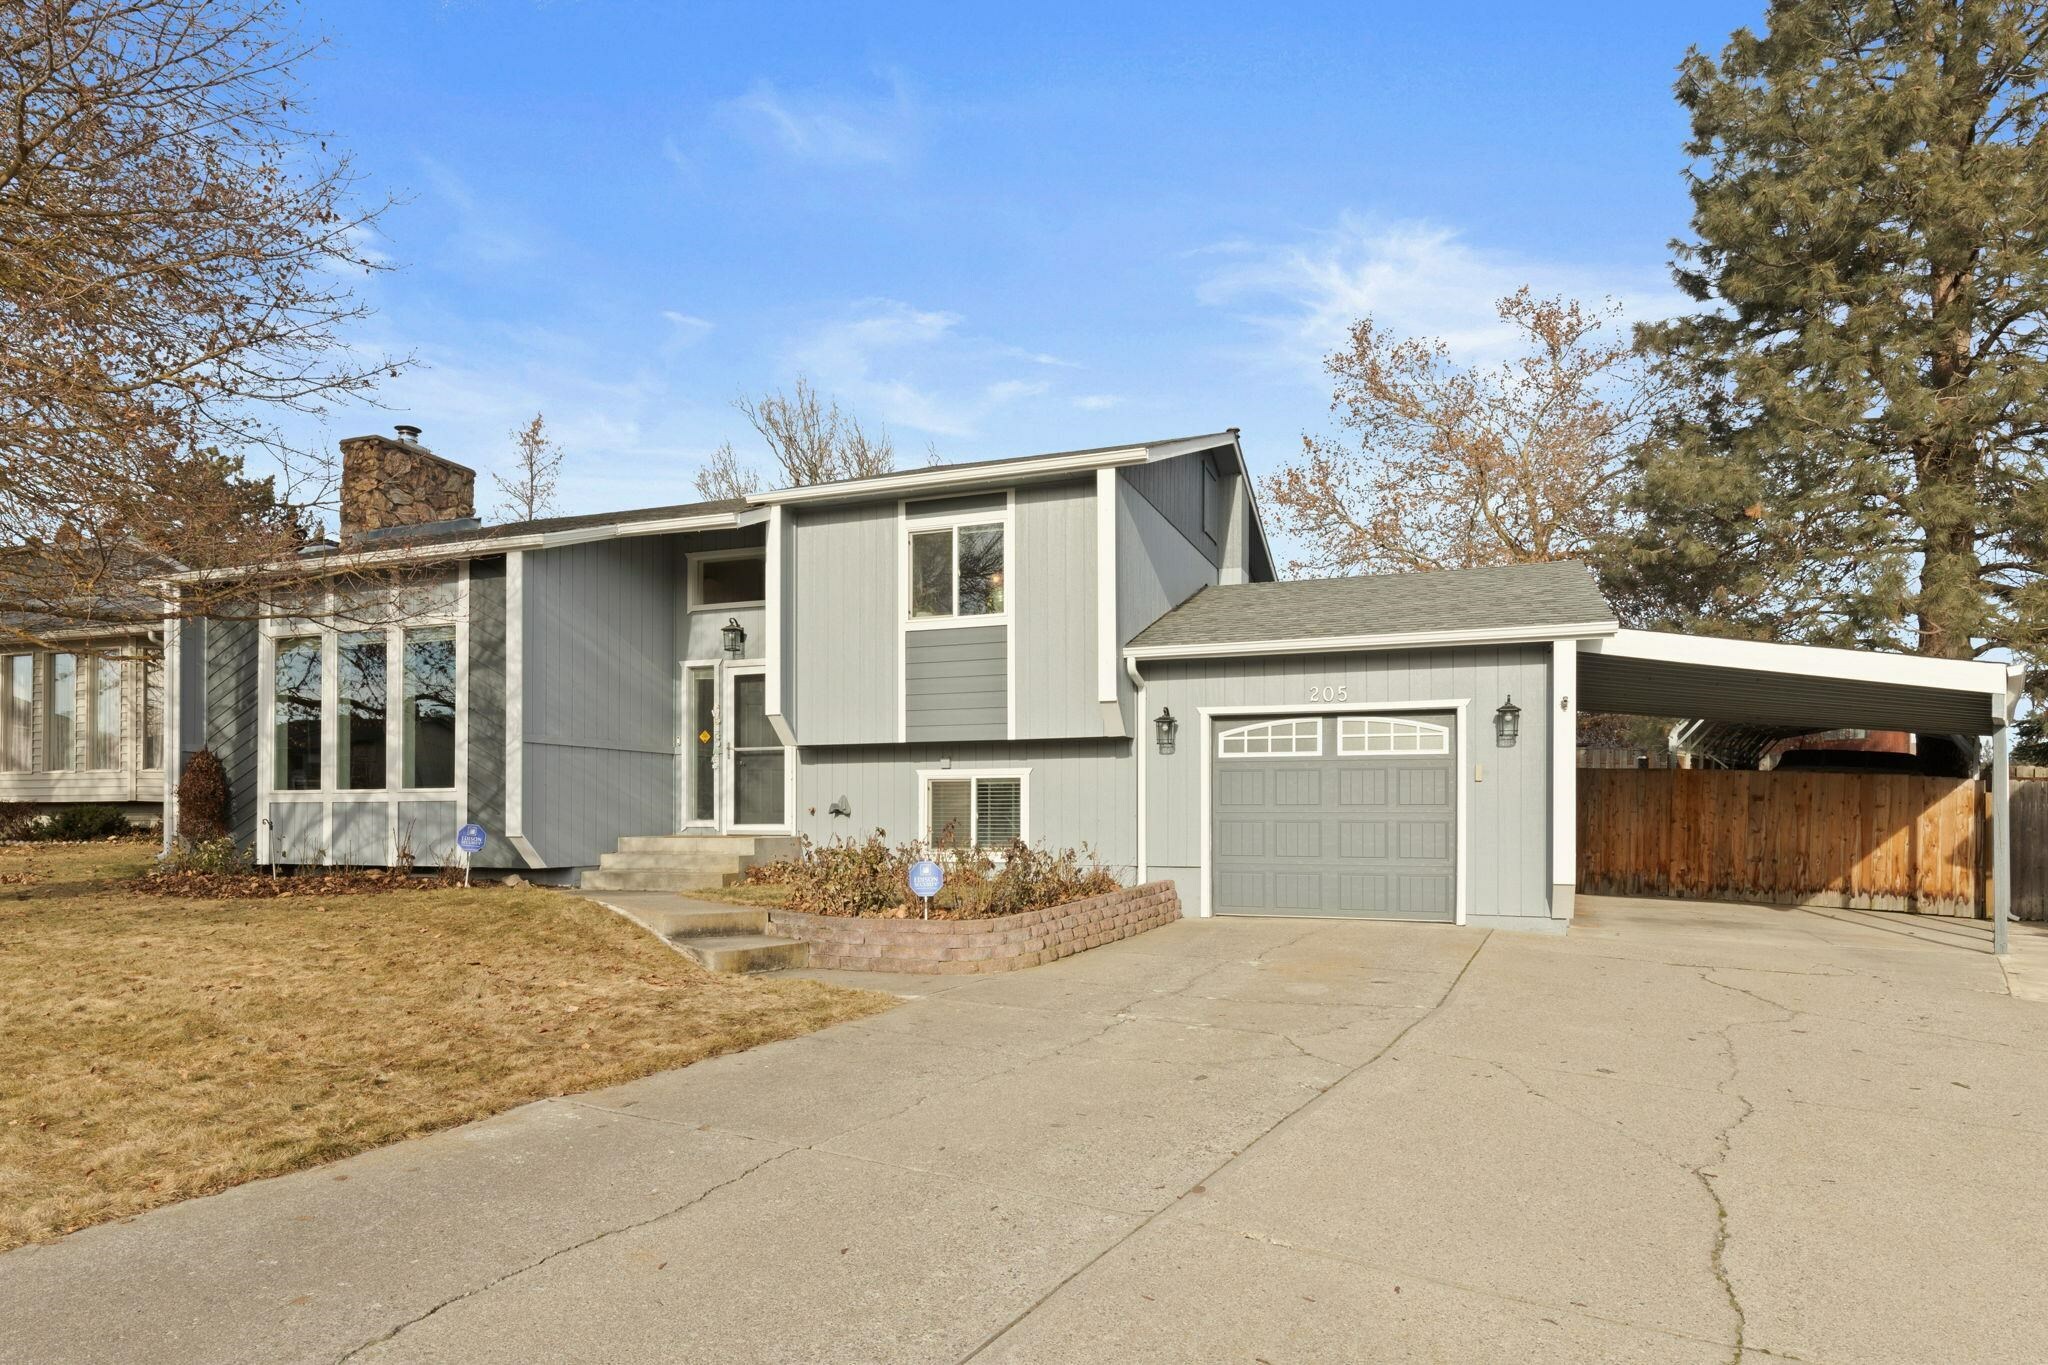 5 bed Spokane home for sale: 205 E Houghton Ave, Spokane, WA 99208